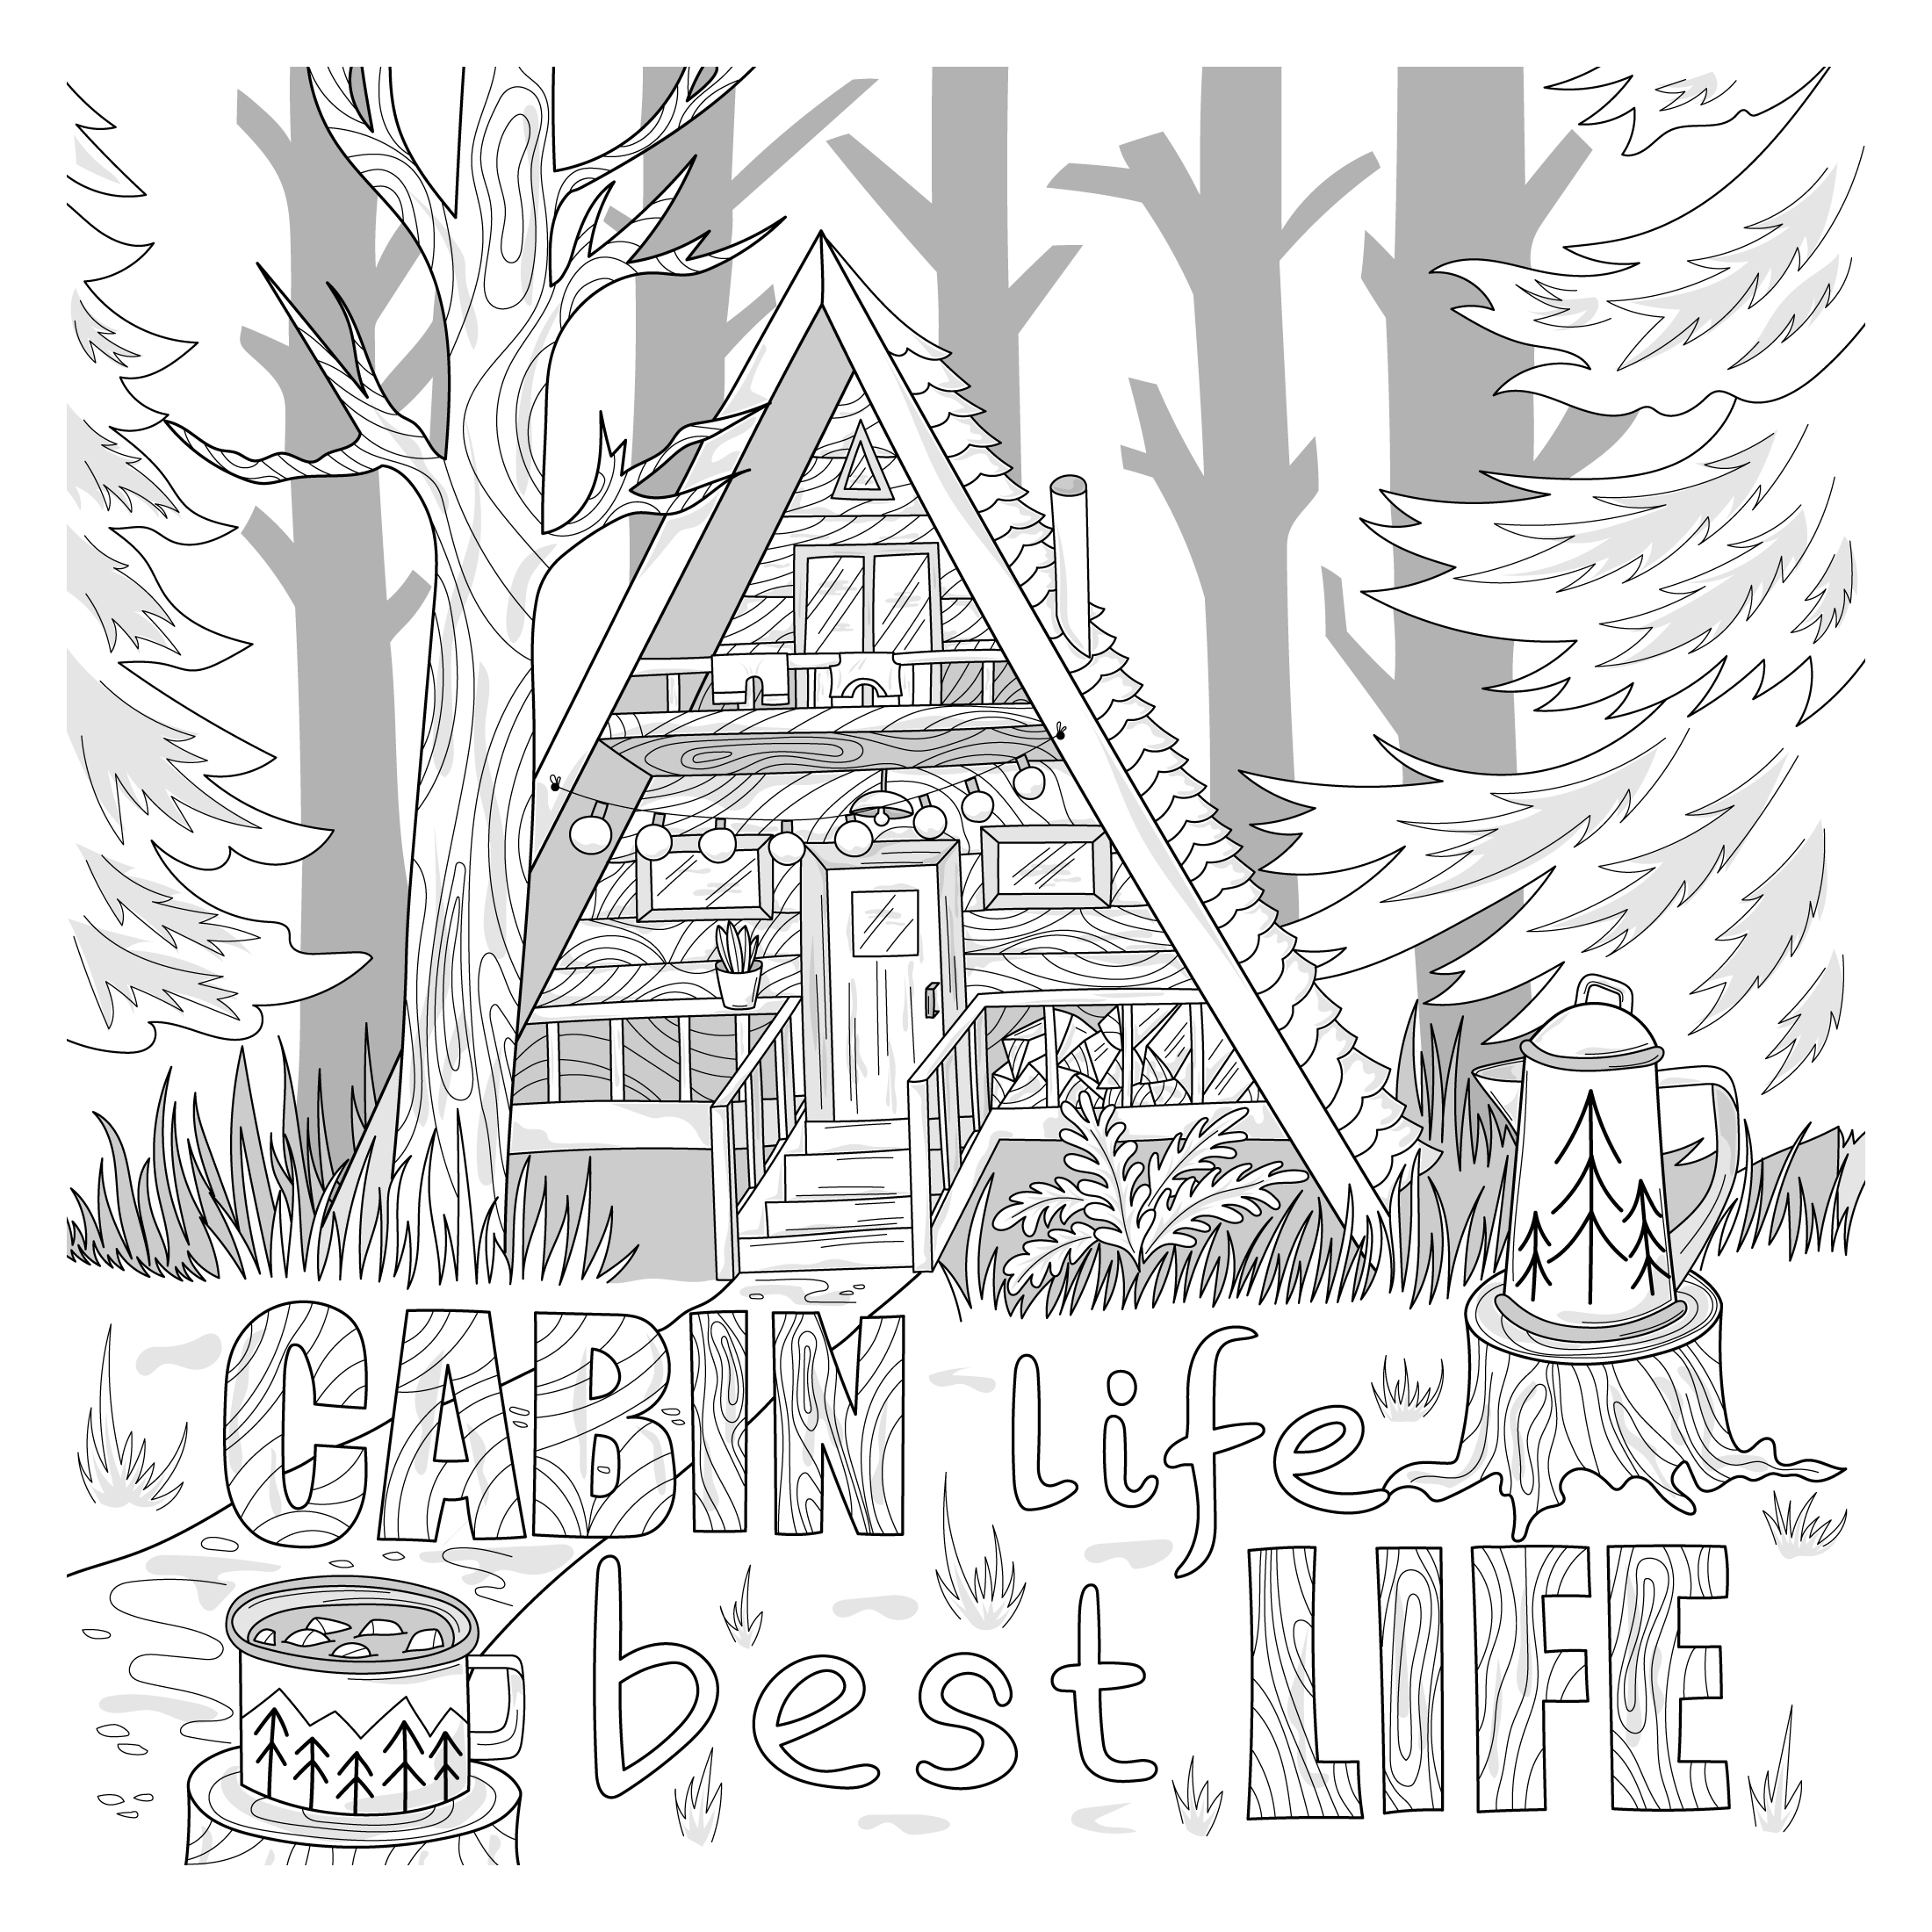 Cabin life